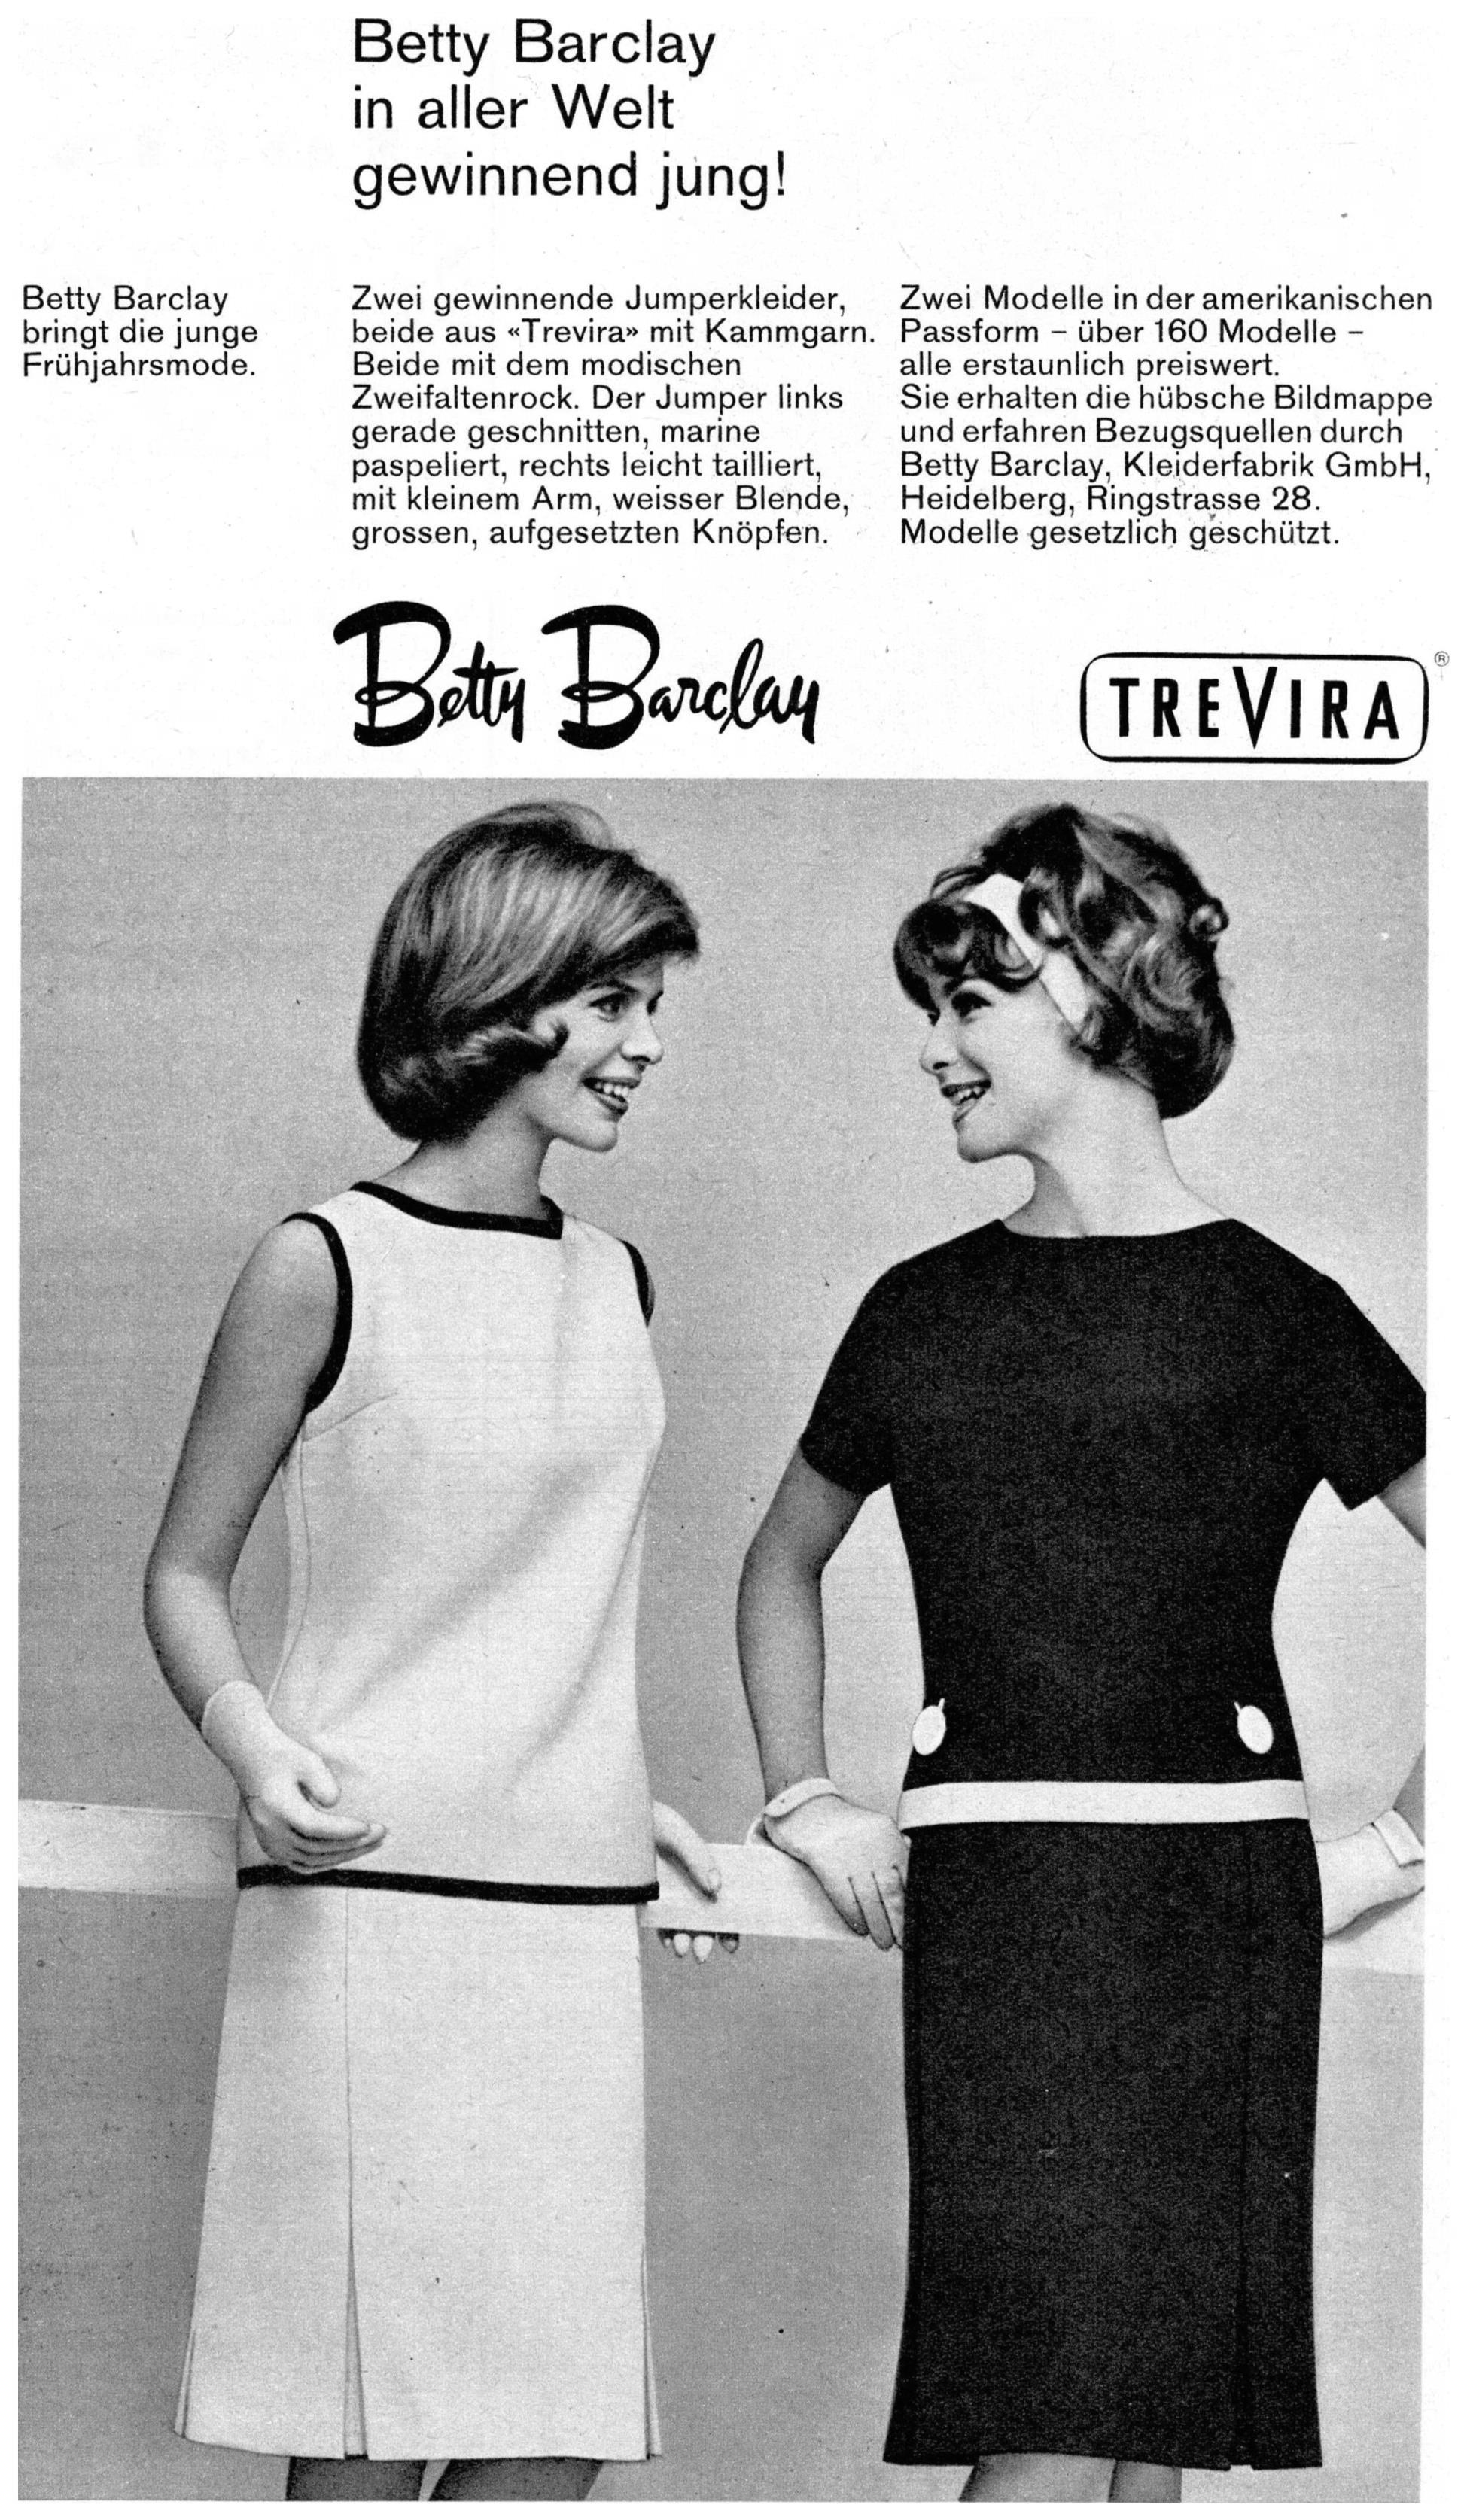 Bety Barclay 1962 0.jpg